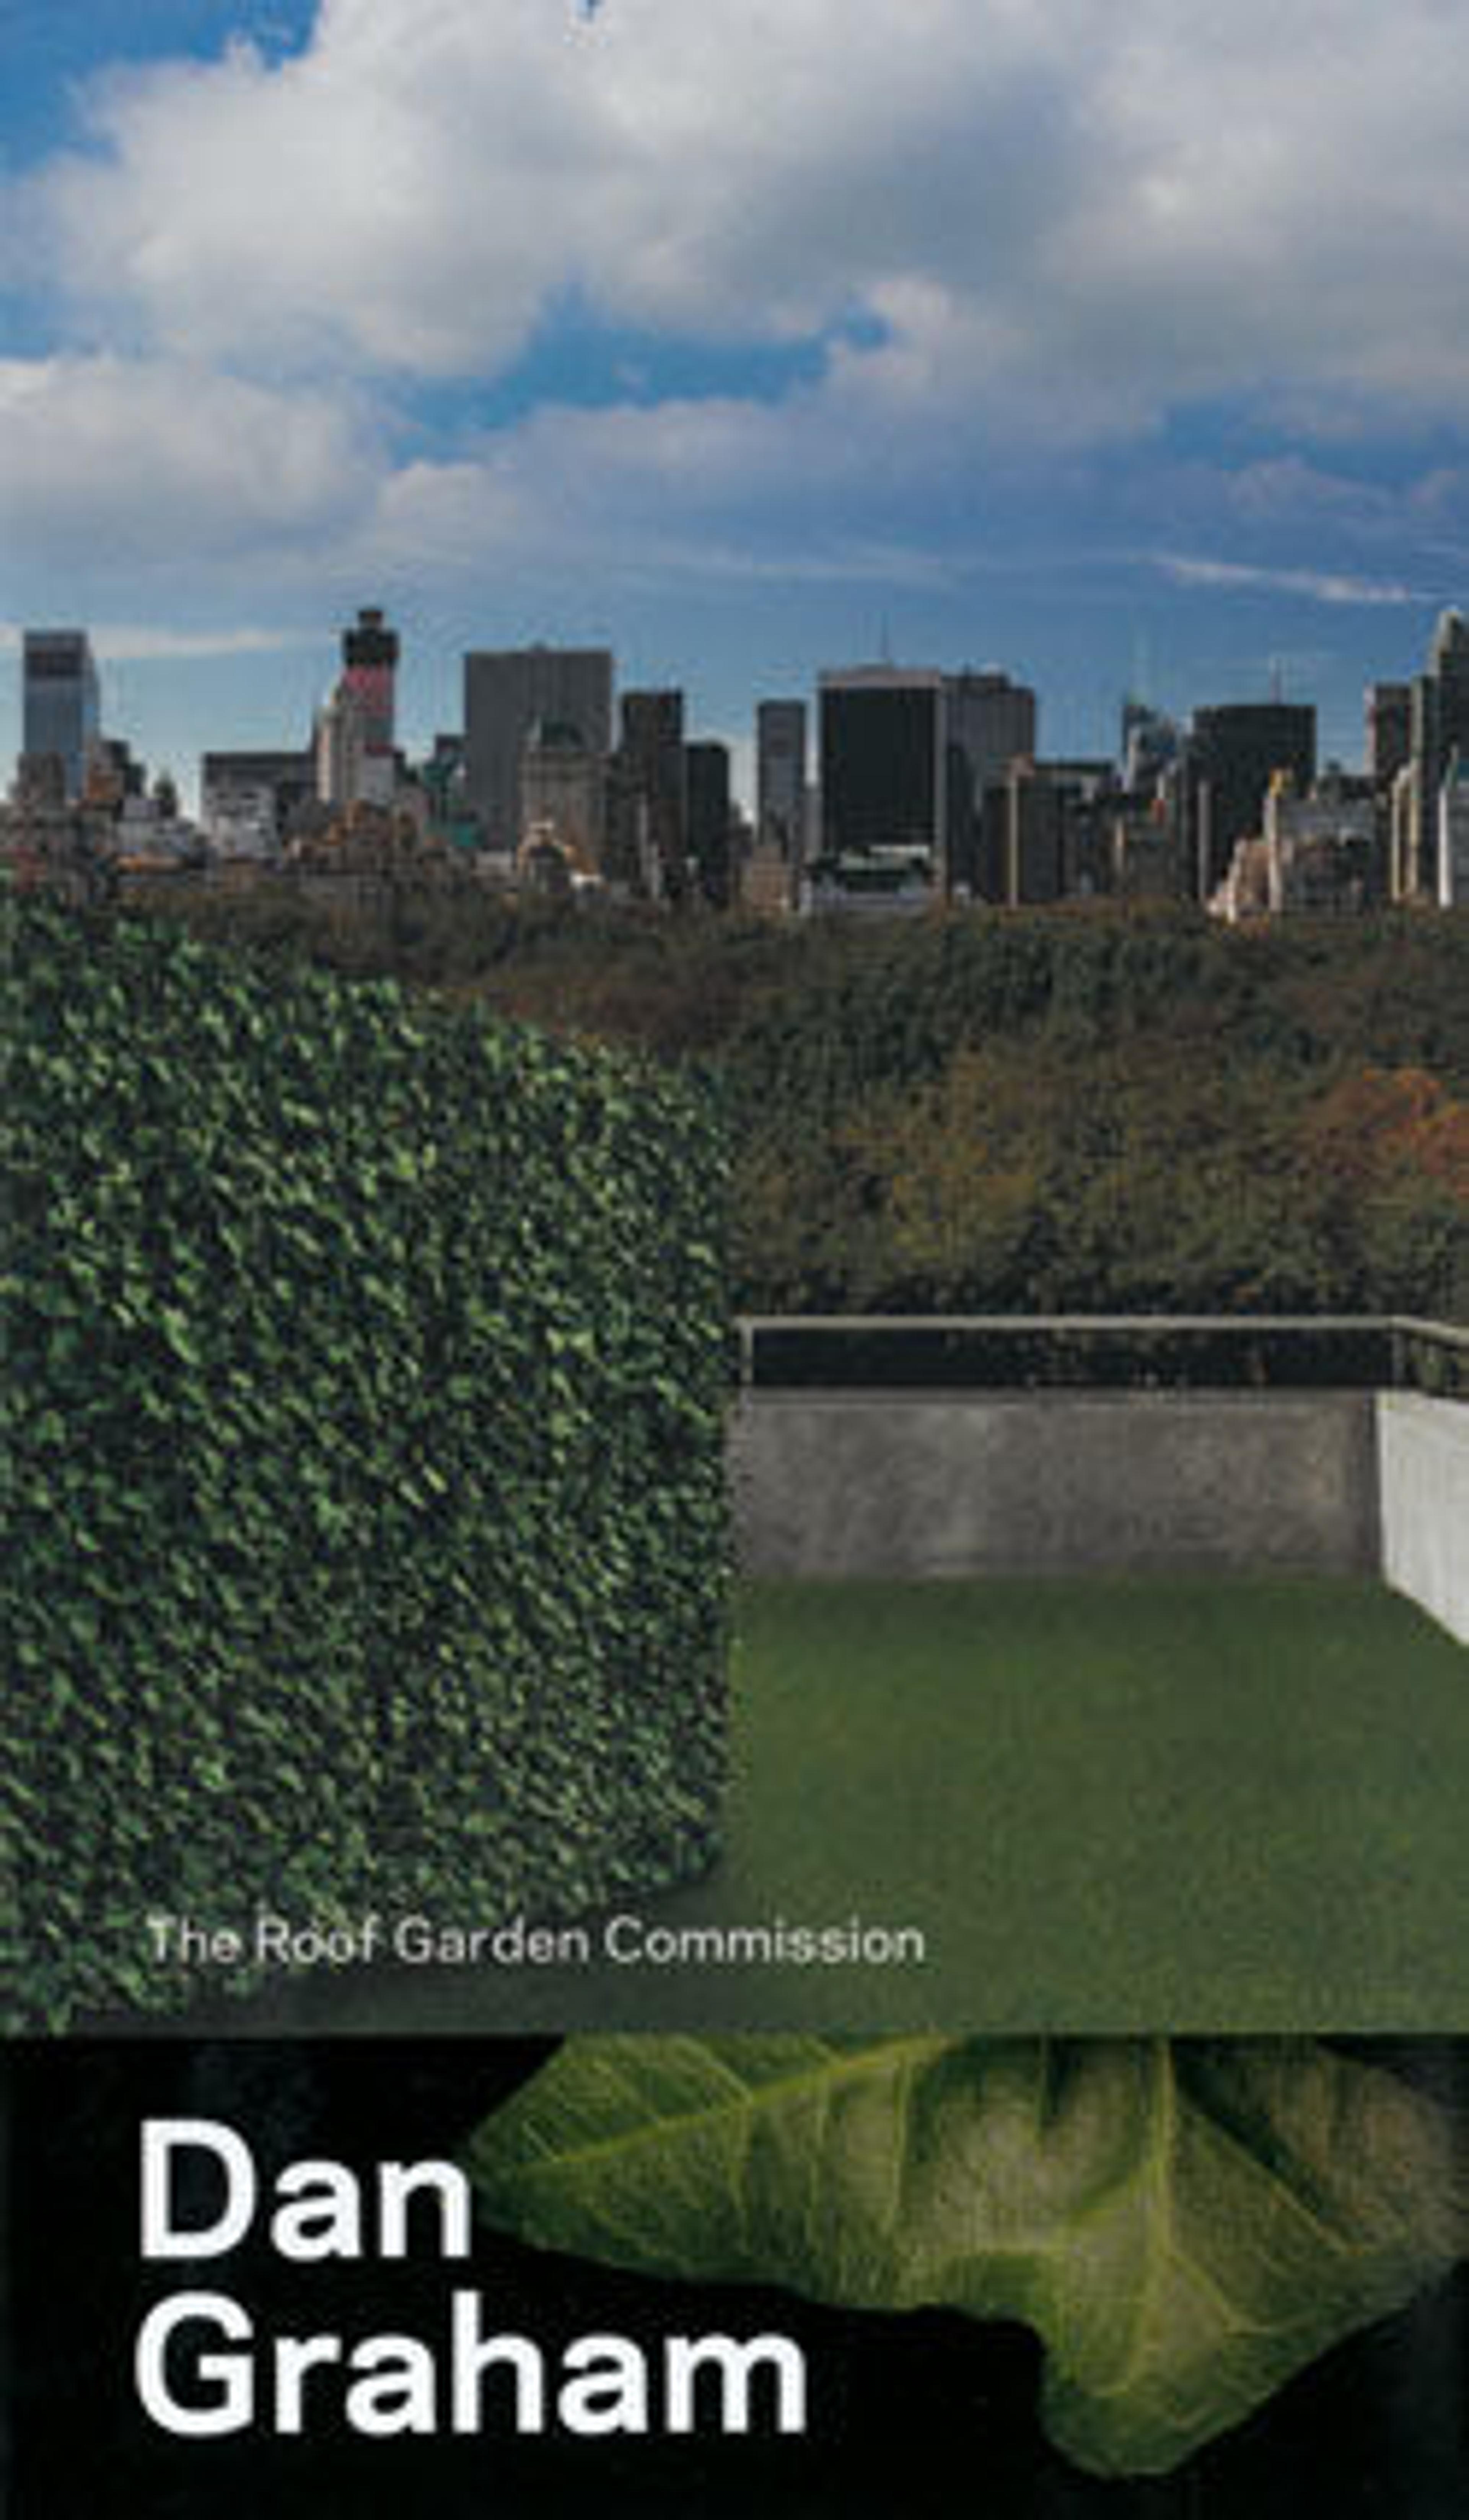 The Roof Garden Commission Dan Graham